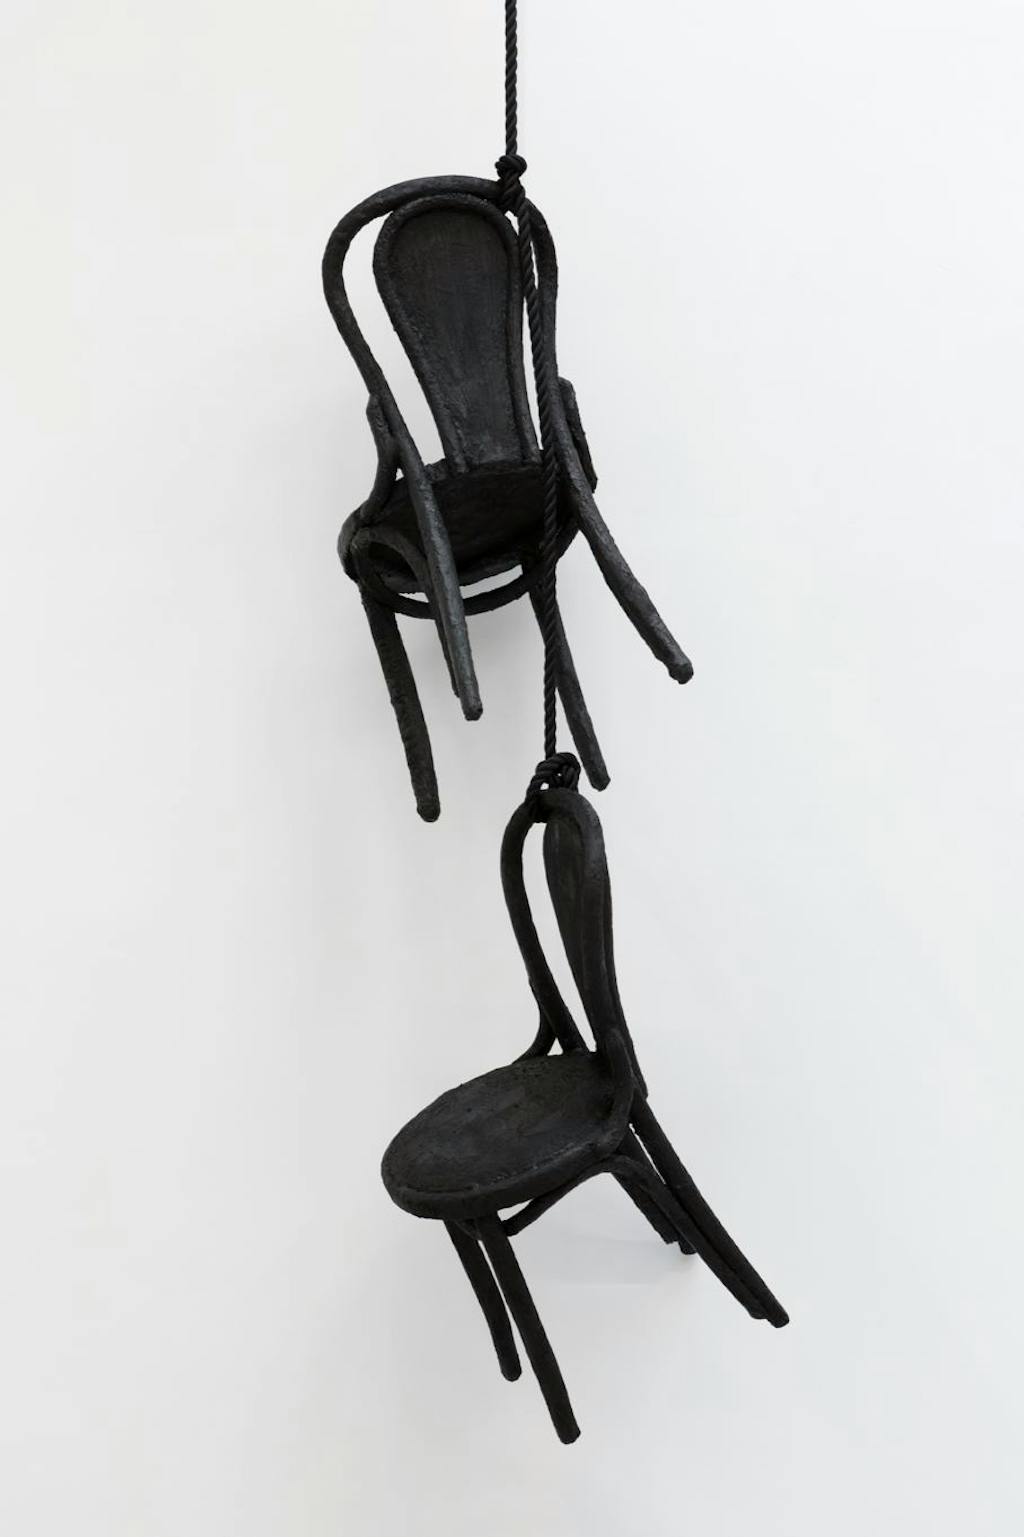 Untitled / Chairs - © kamel mennour